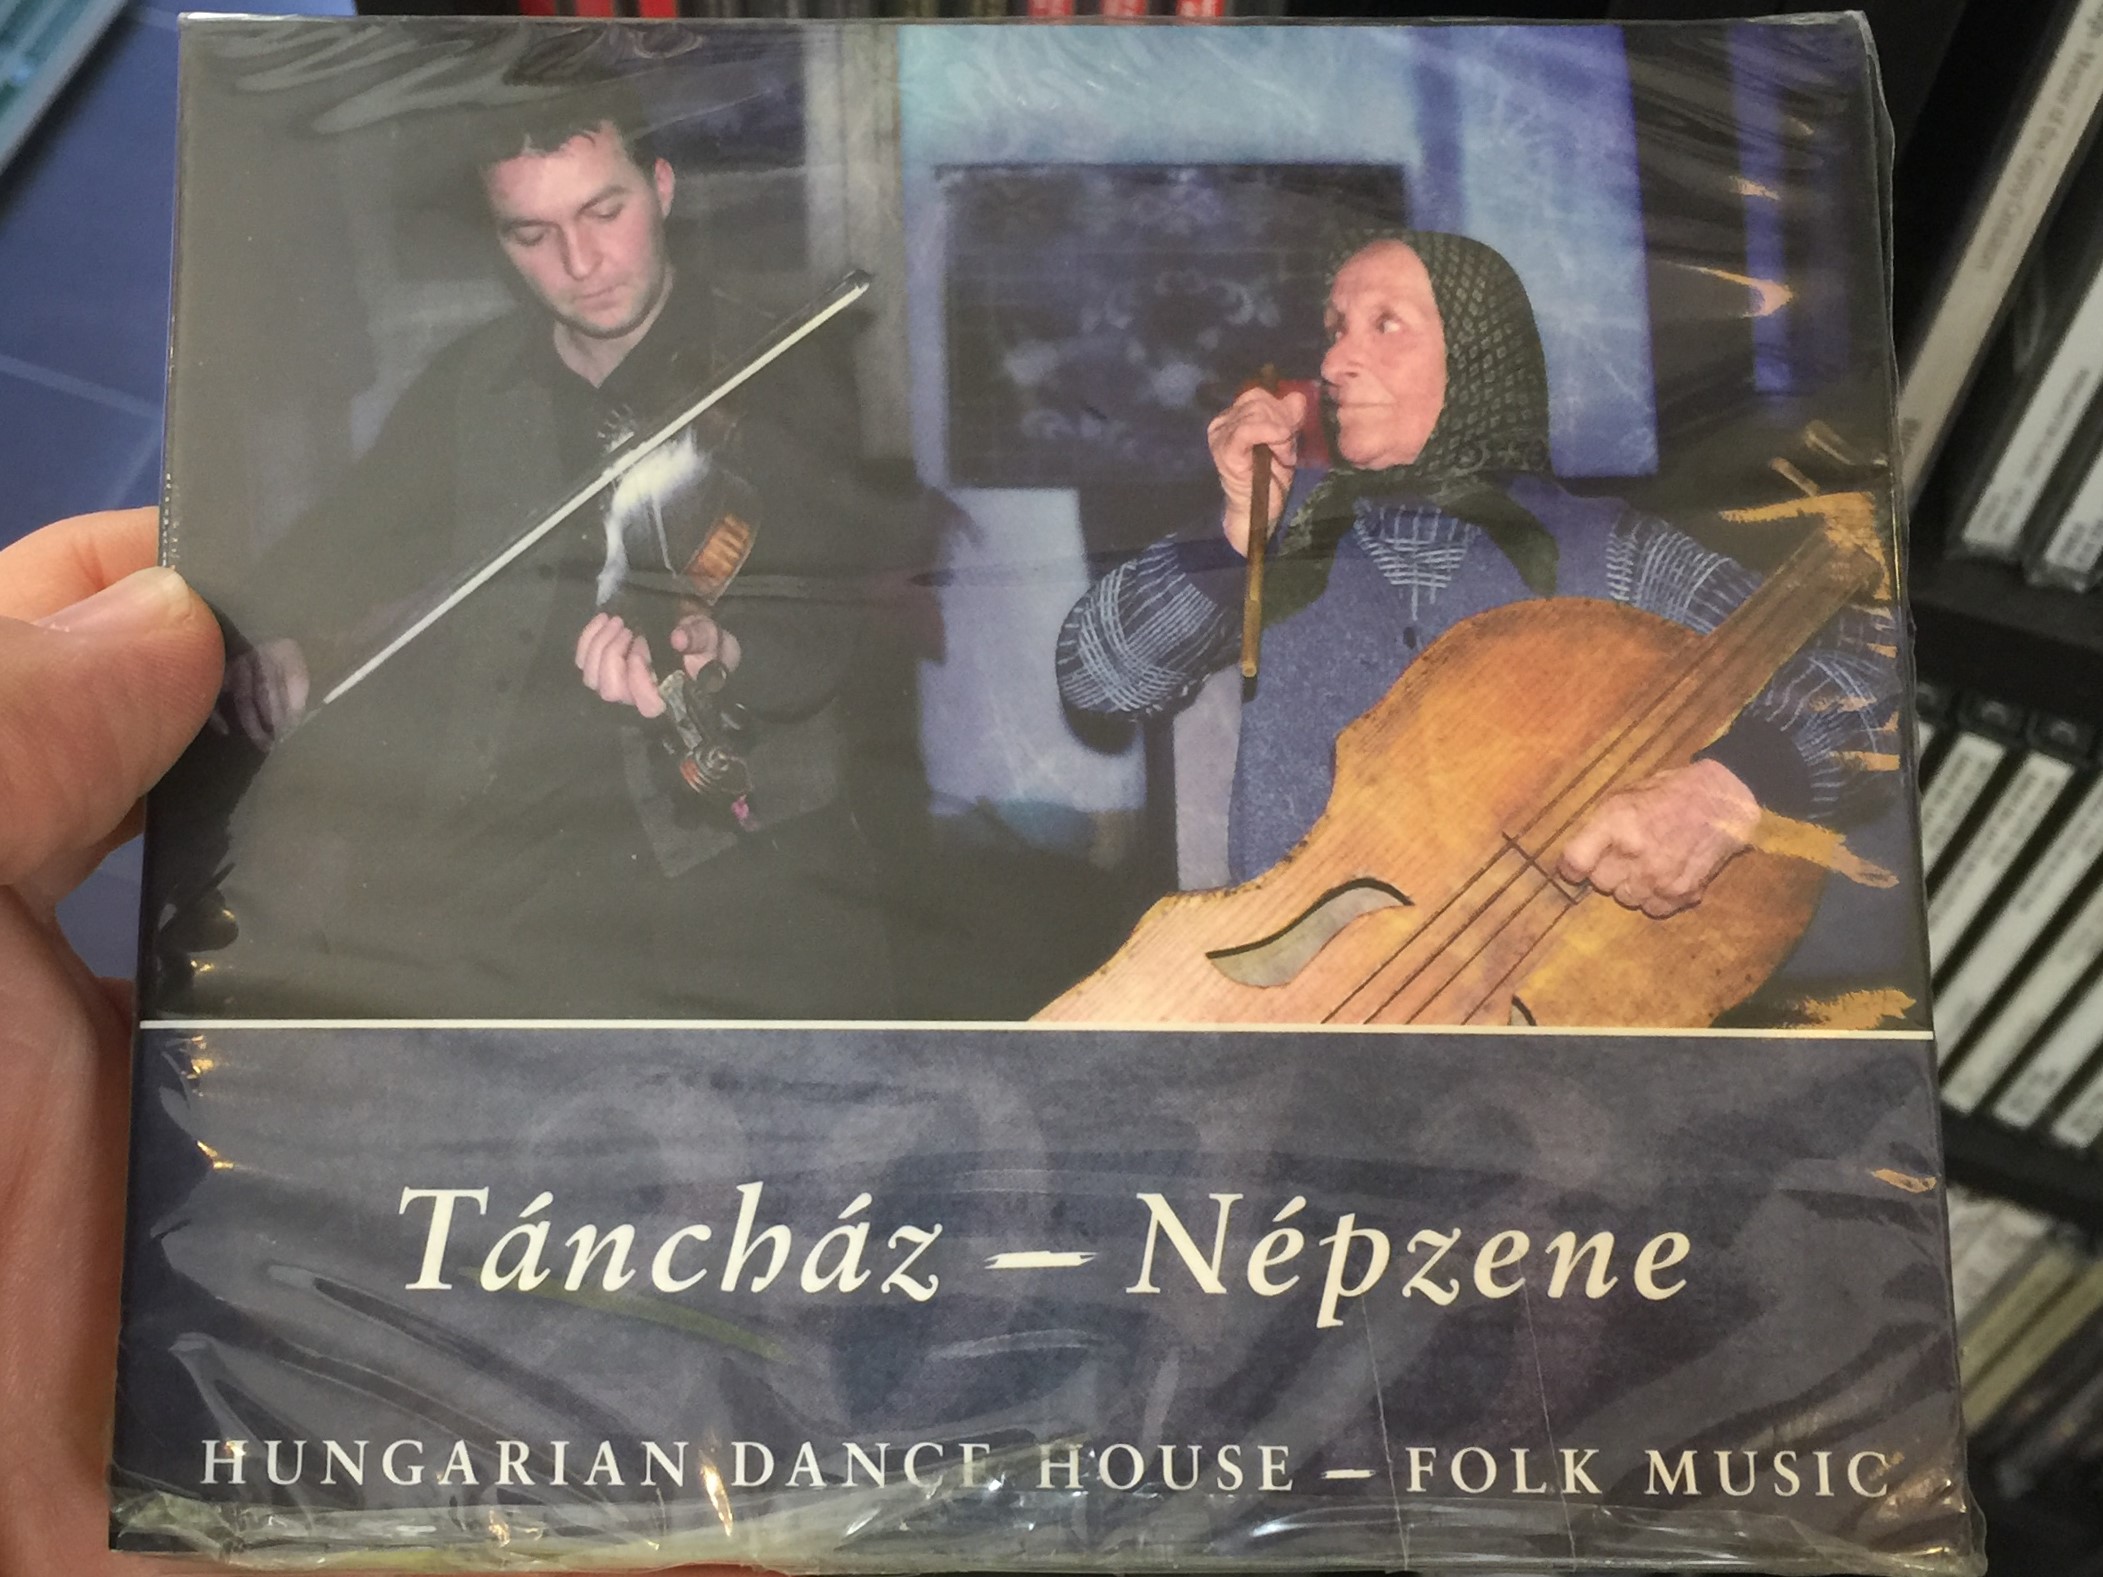 t-nch-z-n-pzene-2013-hungarian-dance-house-folk-music-hagyom-nyok-h-za-audio-cd-2013-5999882041551-1-.jpg